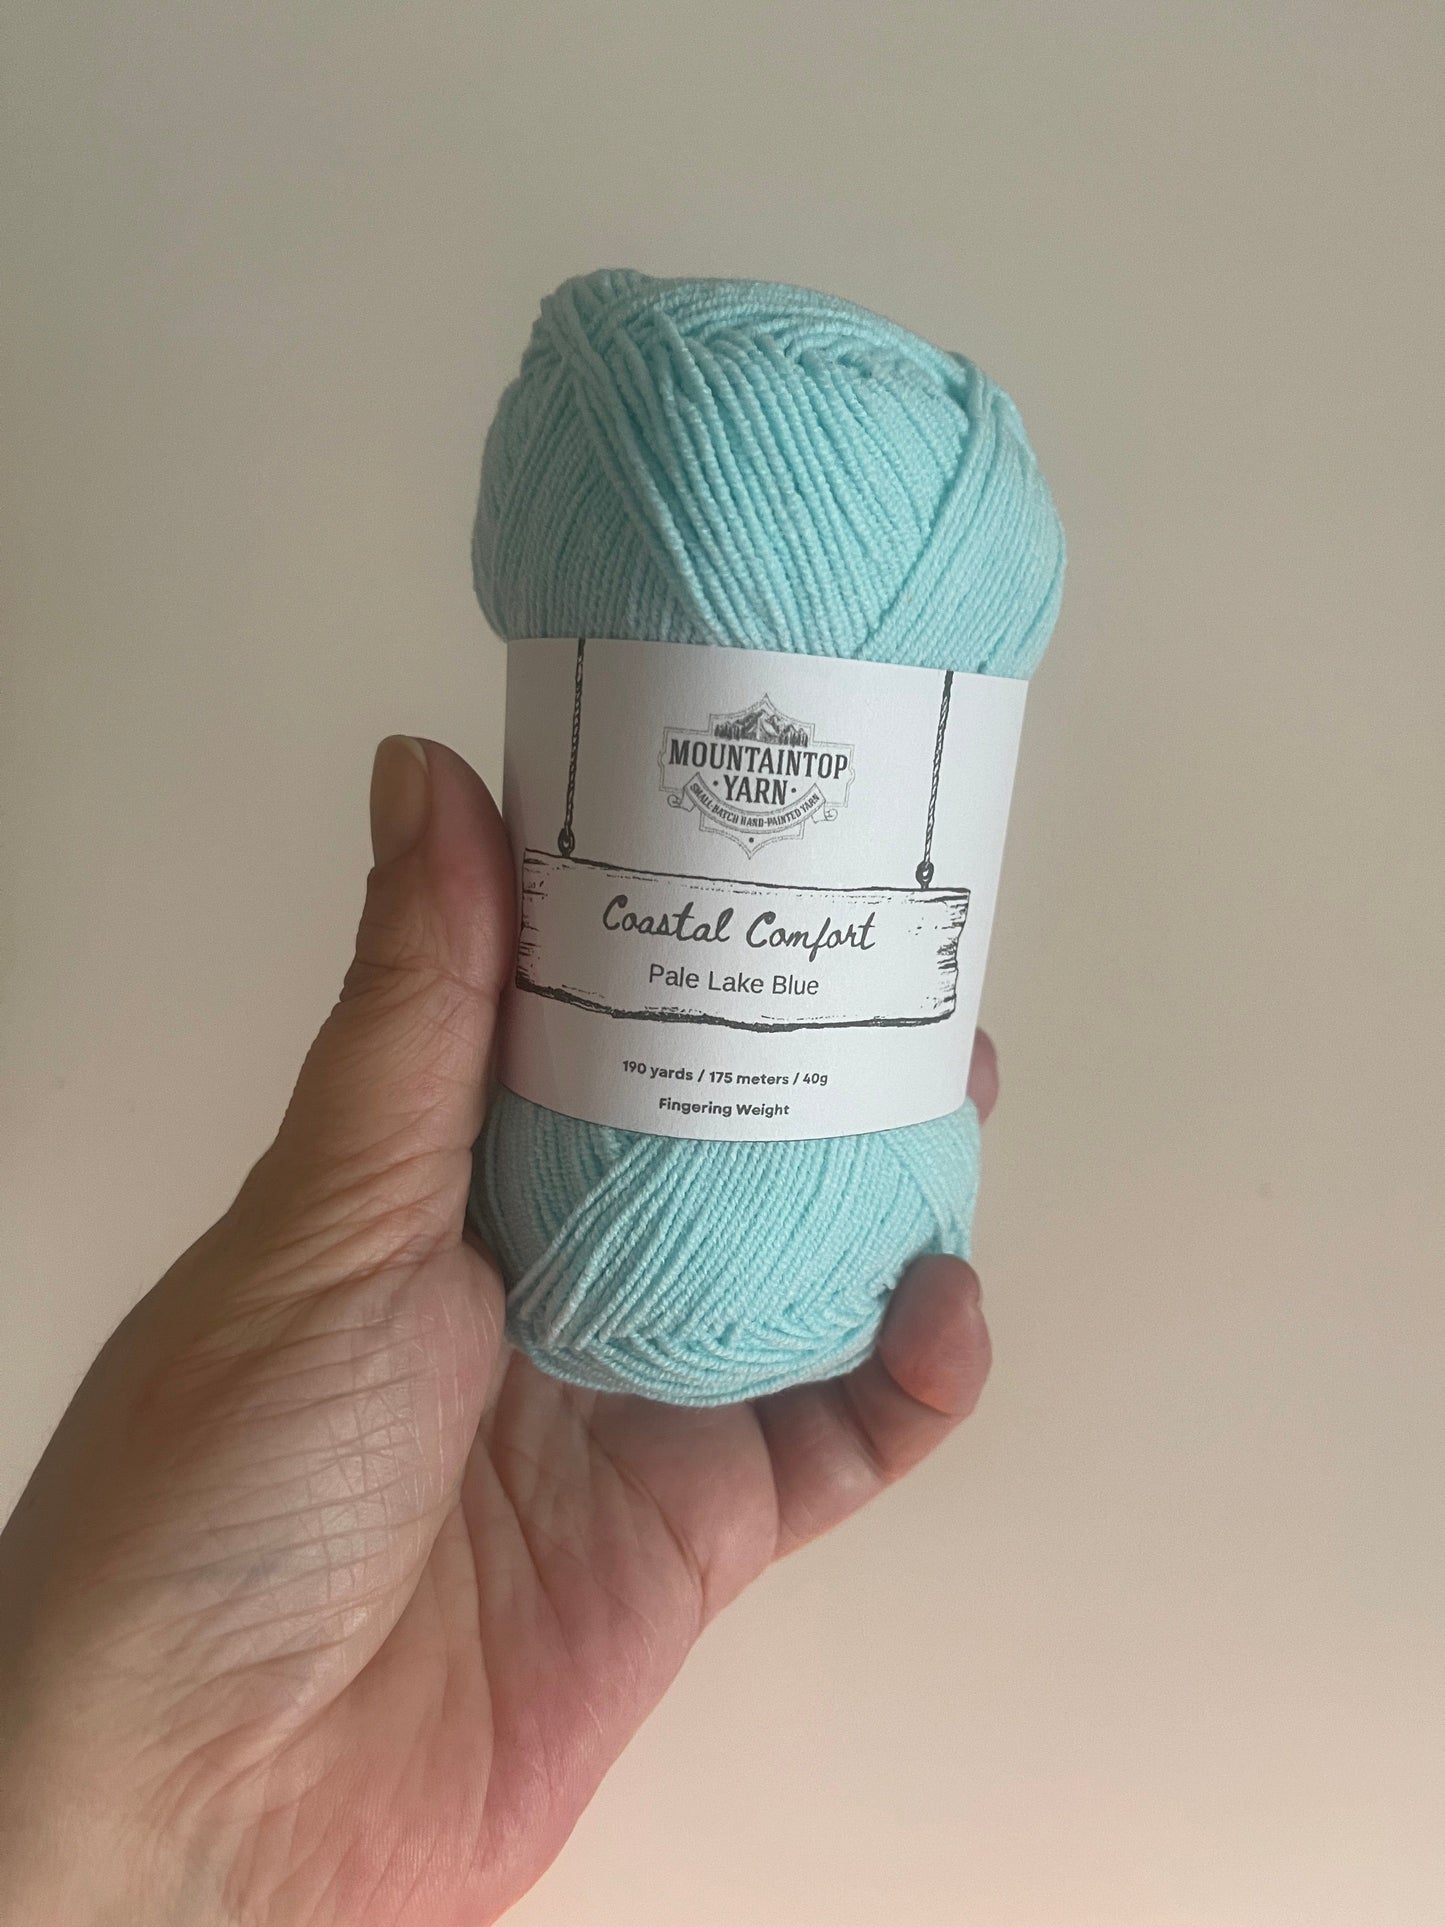 Mountaintop Yarn Pale Lake Blue Coastal Comfort - Cotton and Acrylic Blend Yarn Yarn